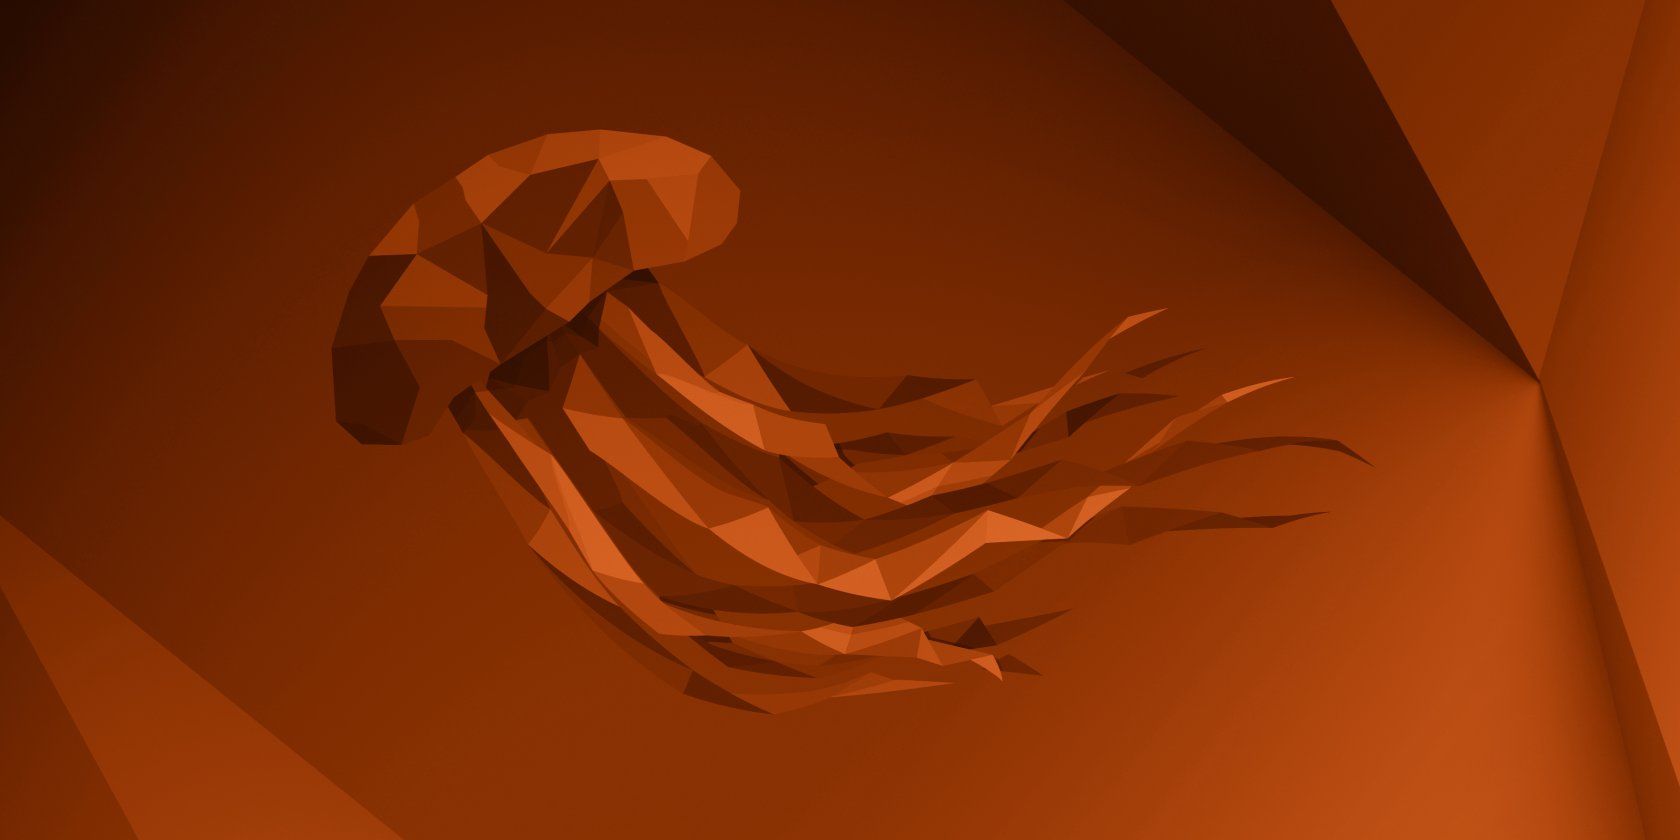 Ubuntu Cinnamon's default desktop background